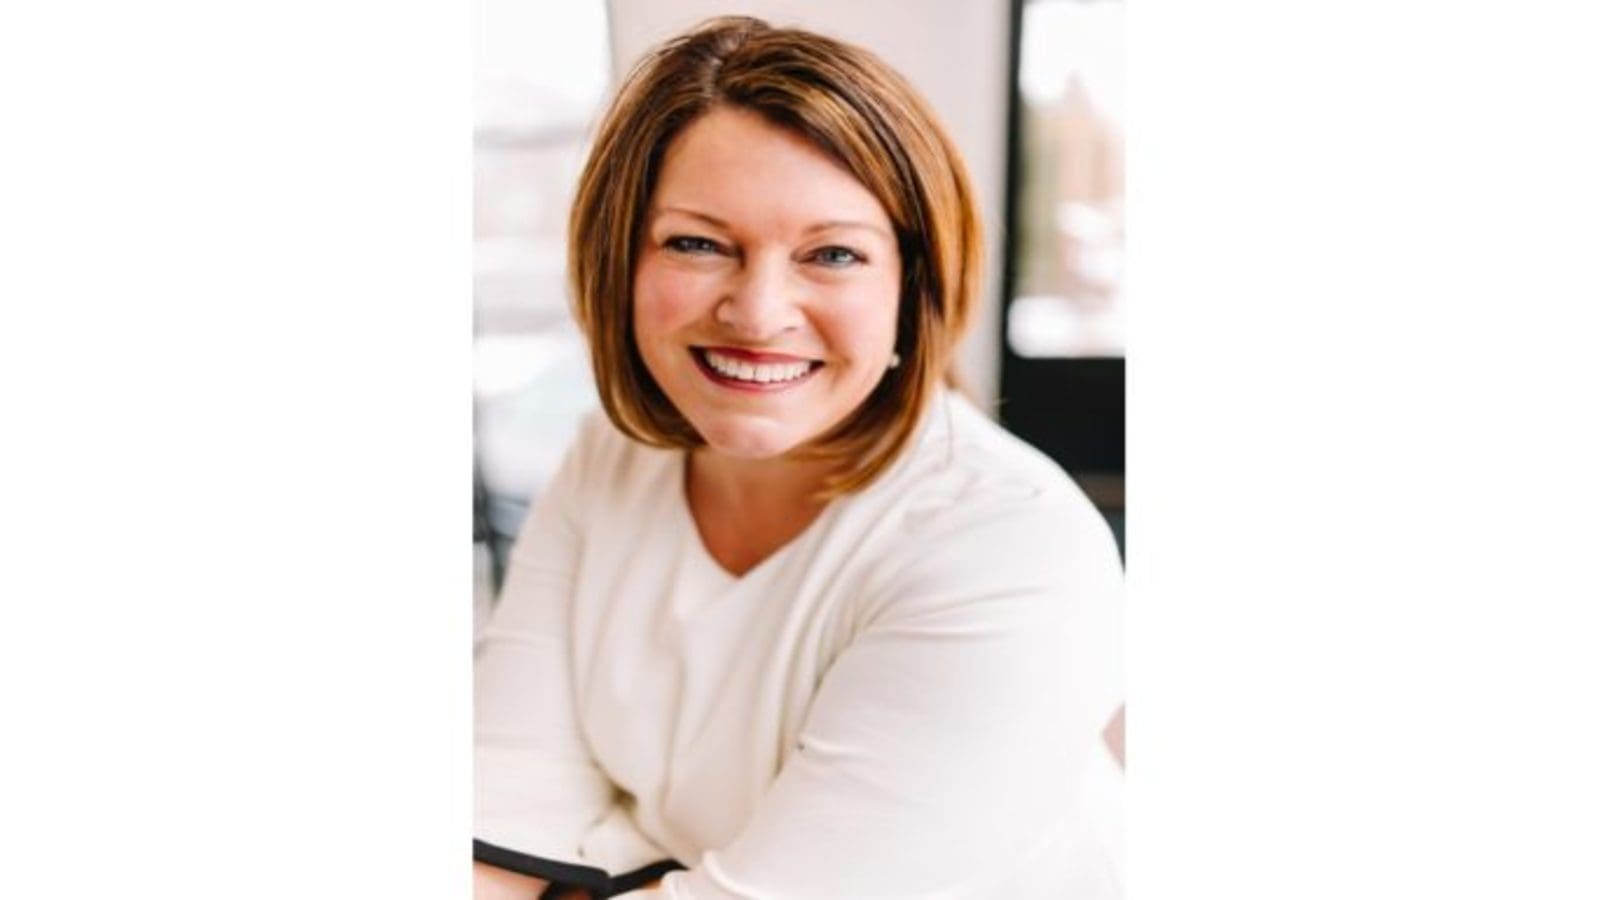 American Society of Baking names Kristen Spriggs to succeed Kent Van Amburg as Executive Director